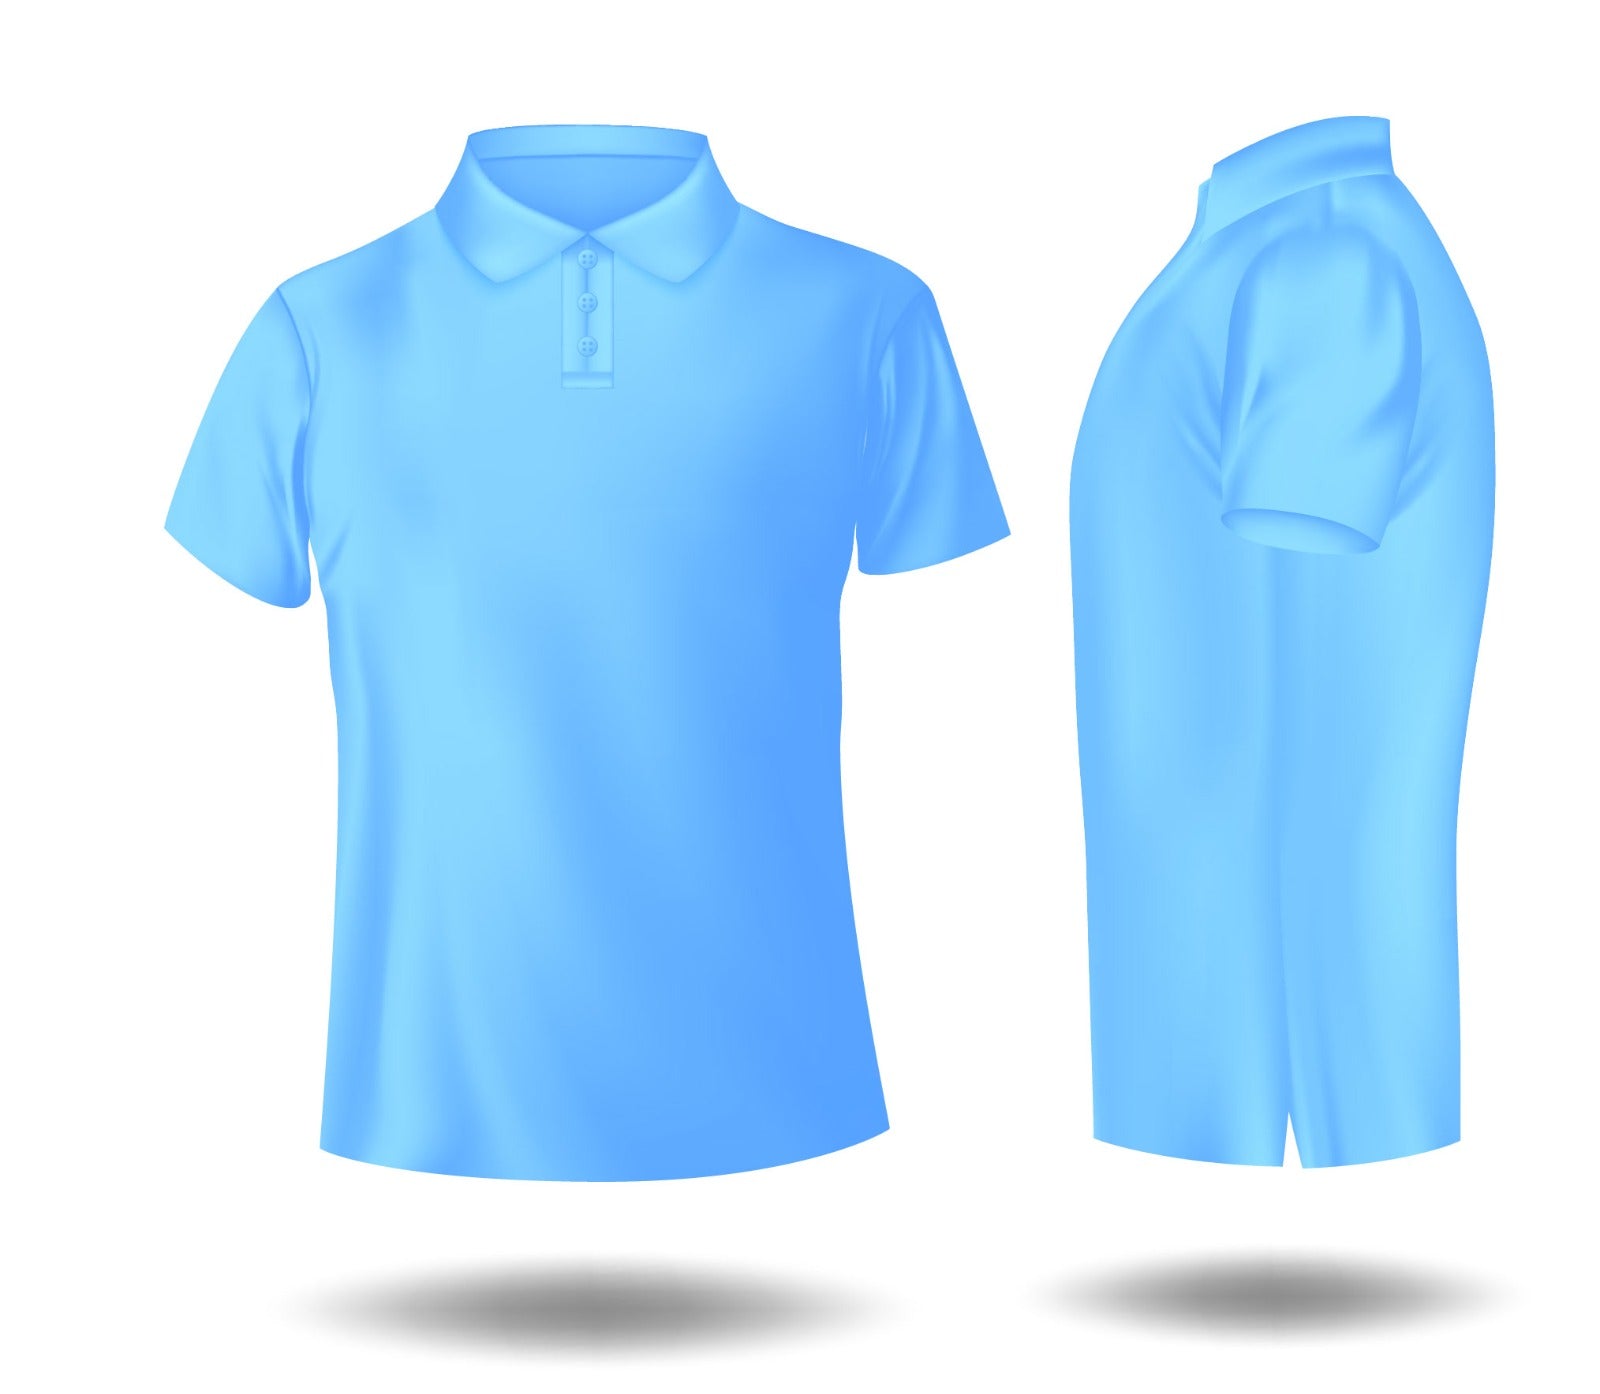 Light blue polo shirt for men and women